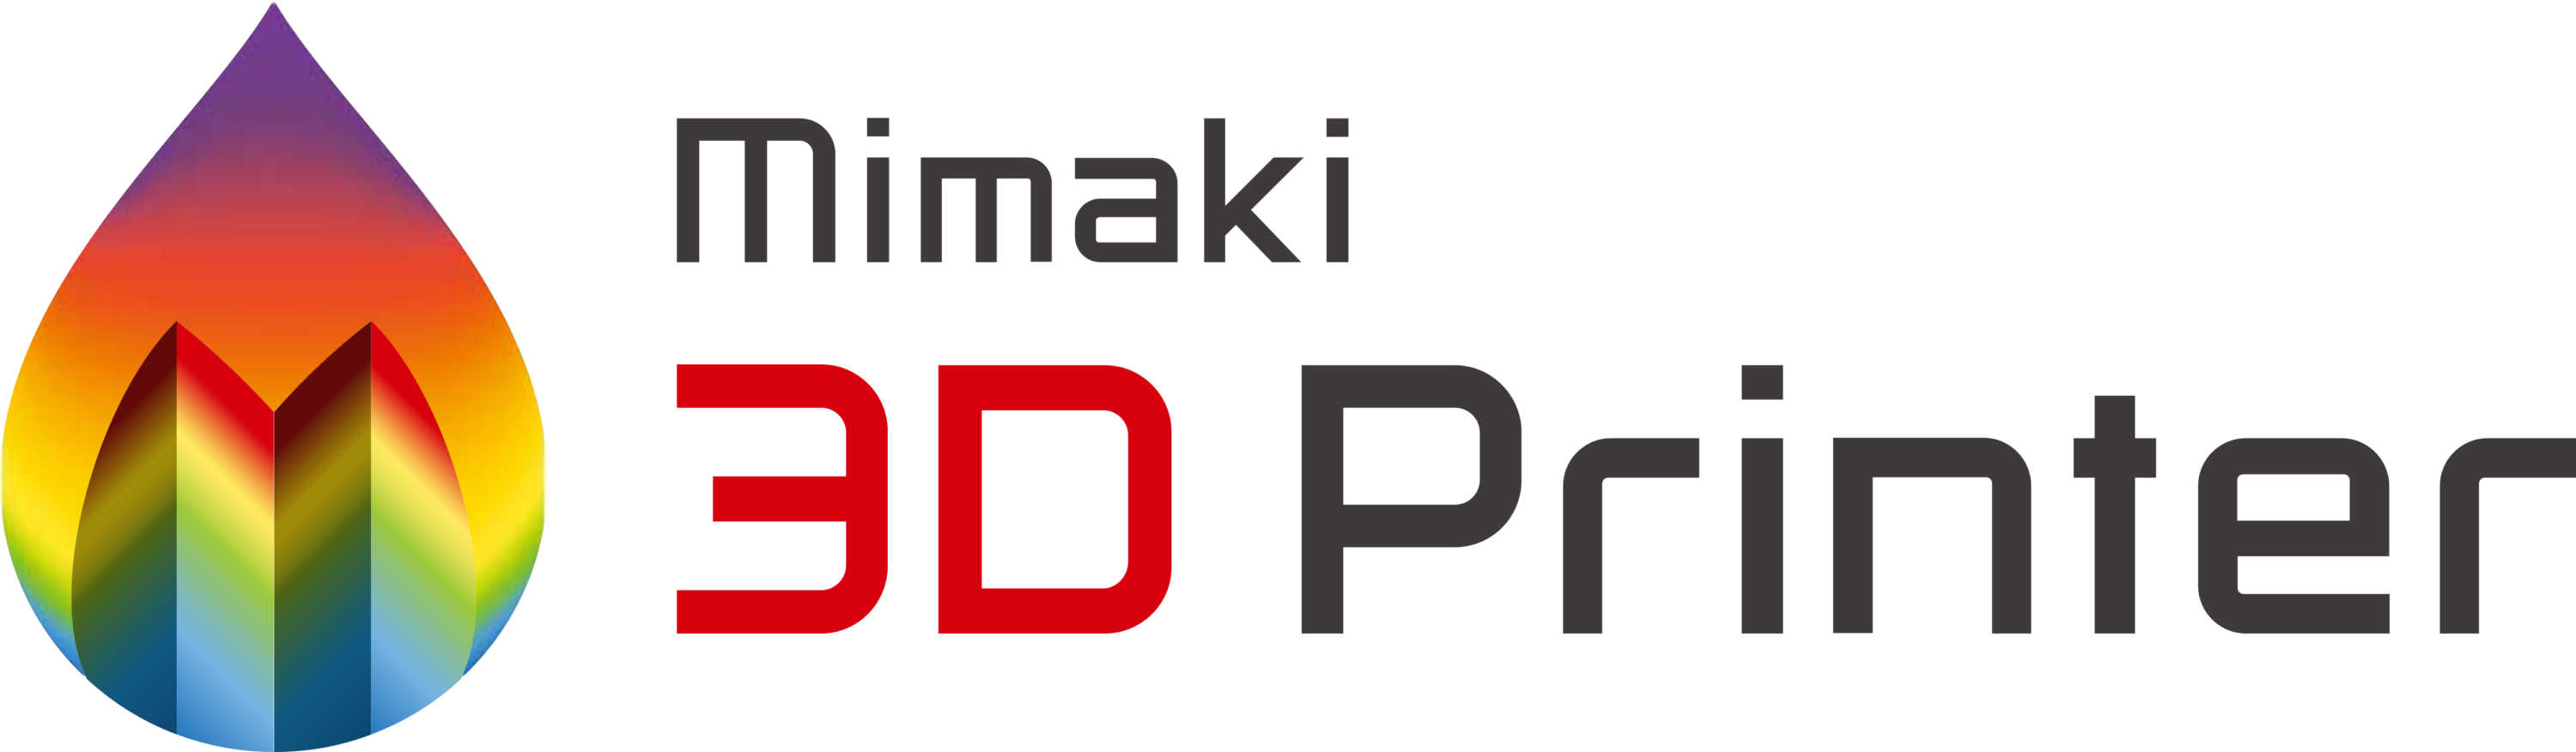 Mimaki 3D Printer Logo